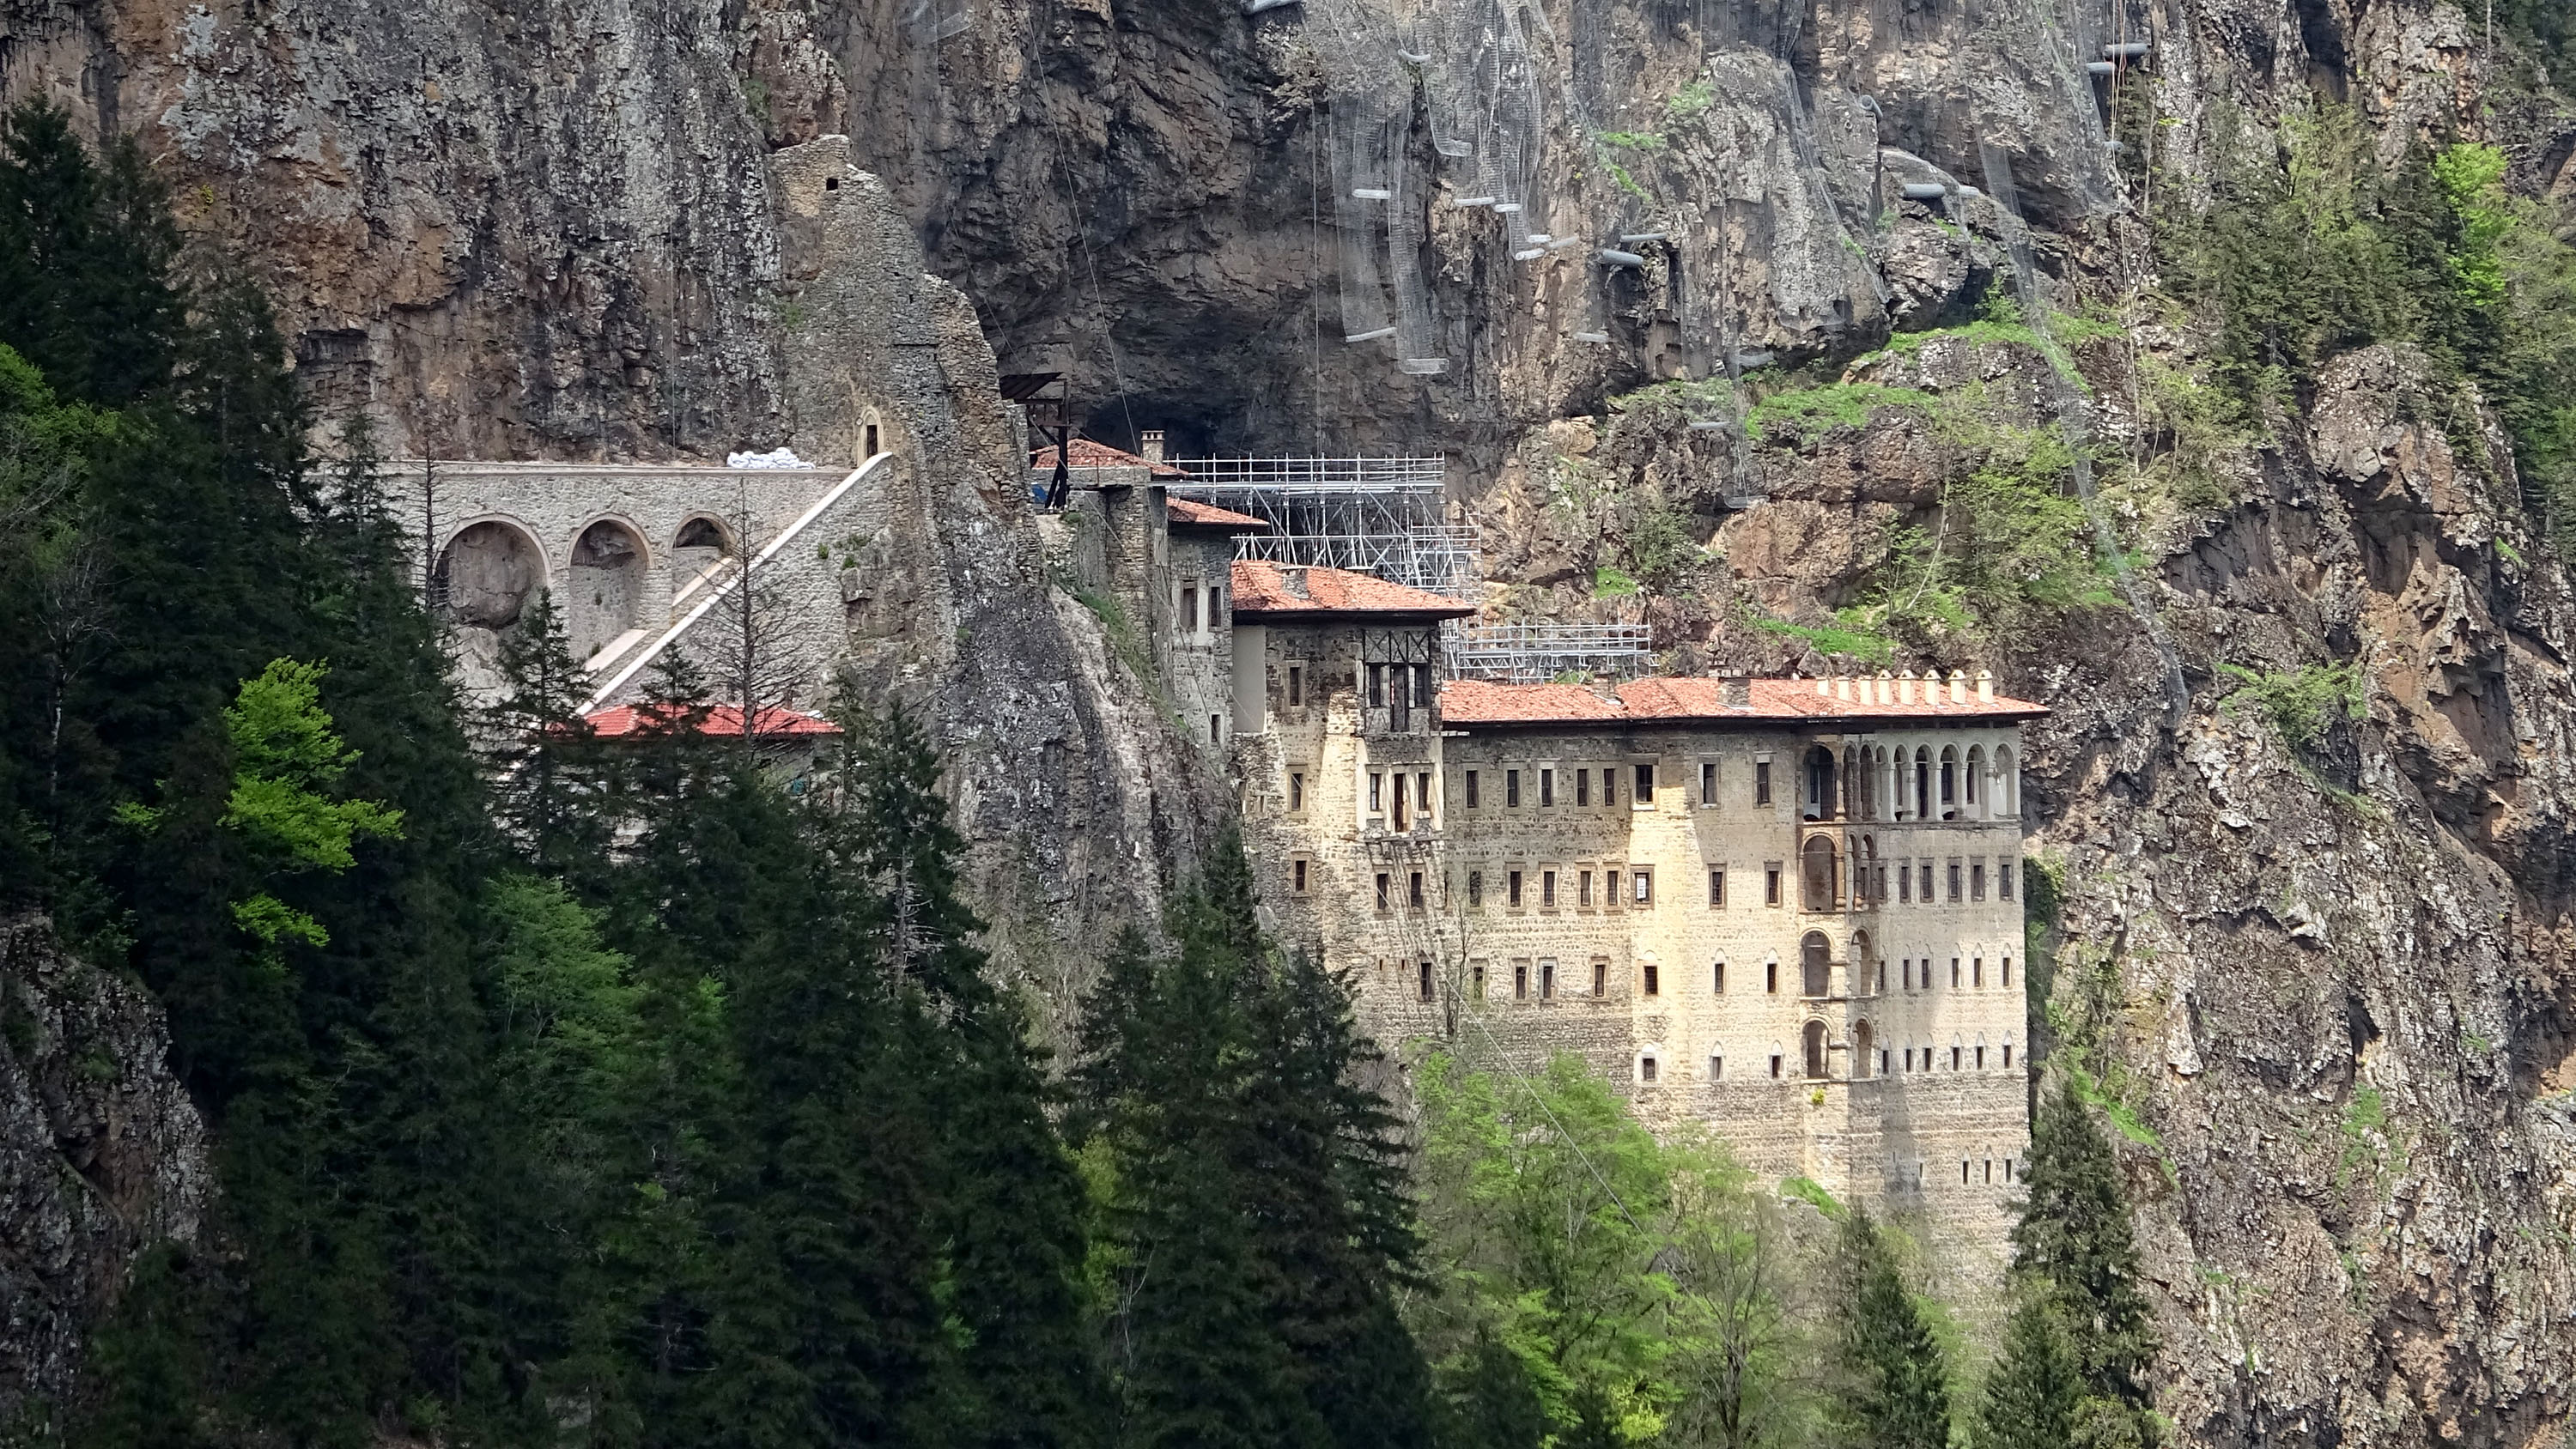 trabzonda-sumela-manastiri-ve-ayasofya-camii-yarin-ziyarete-aciliyor-6772-dhaphoto7.jpg